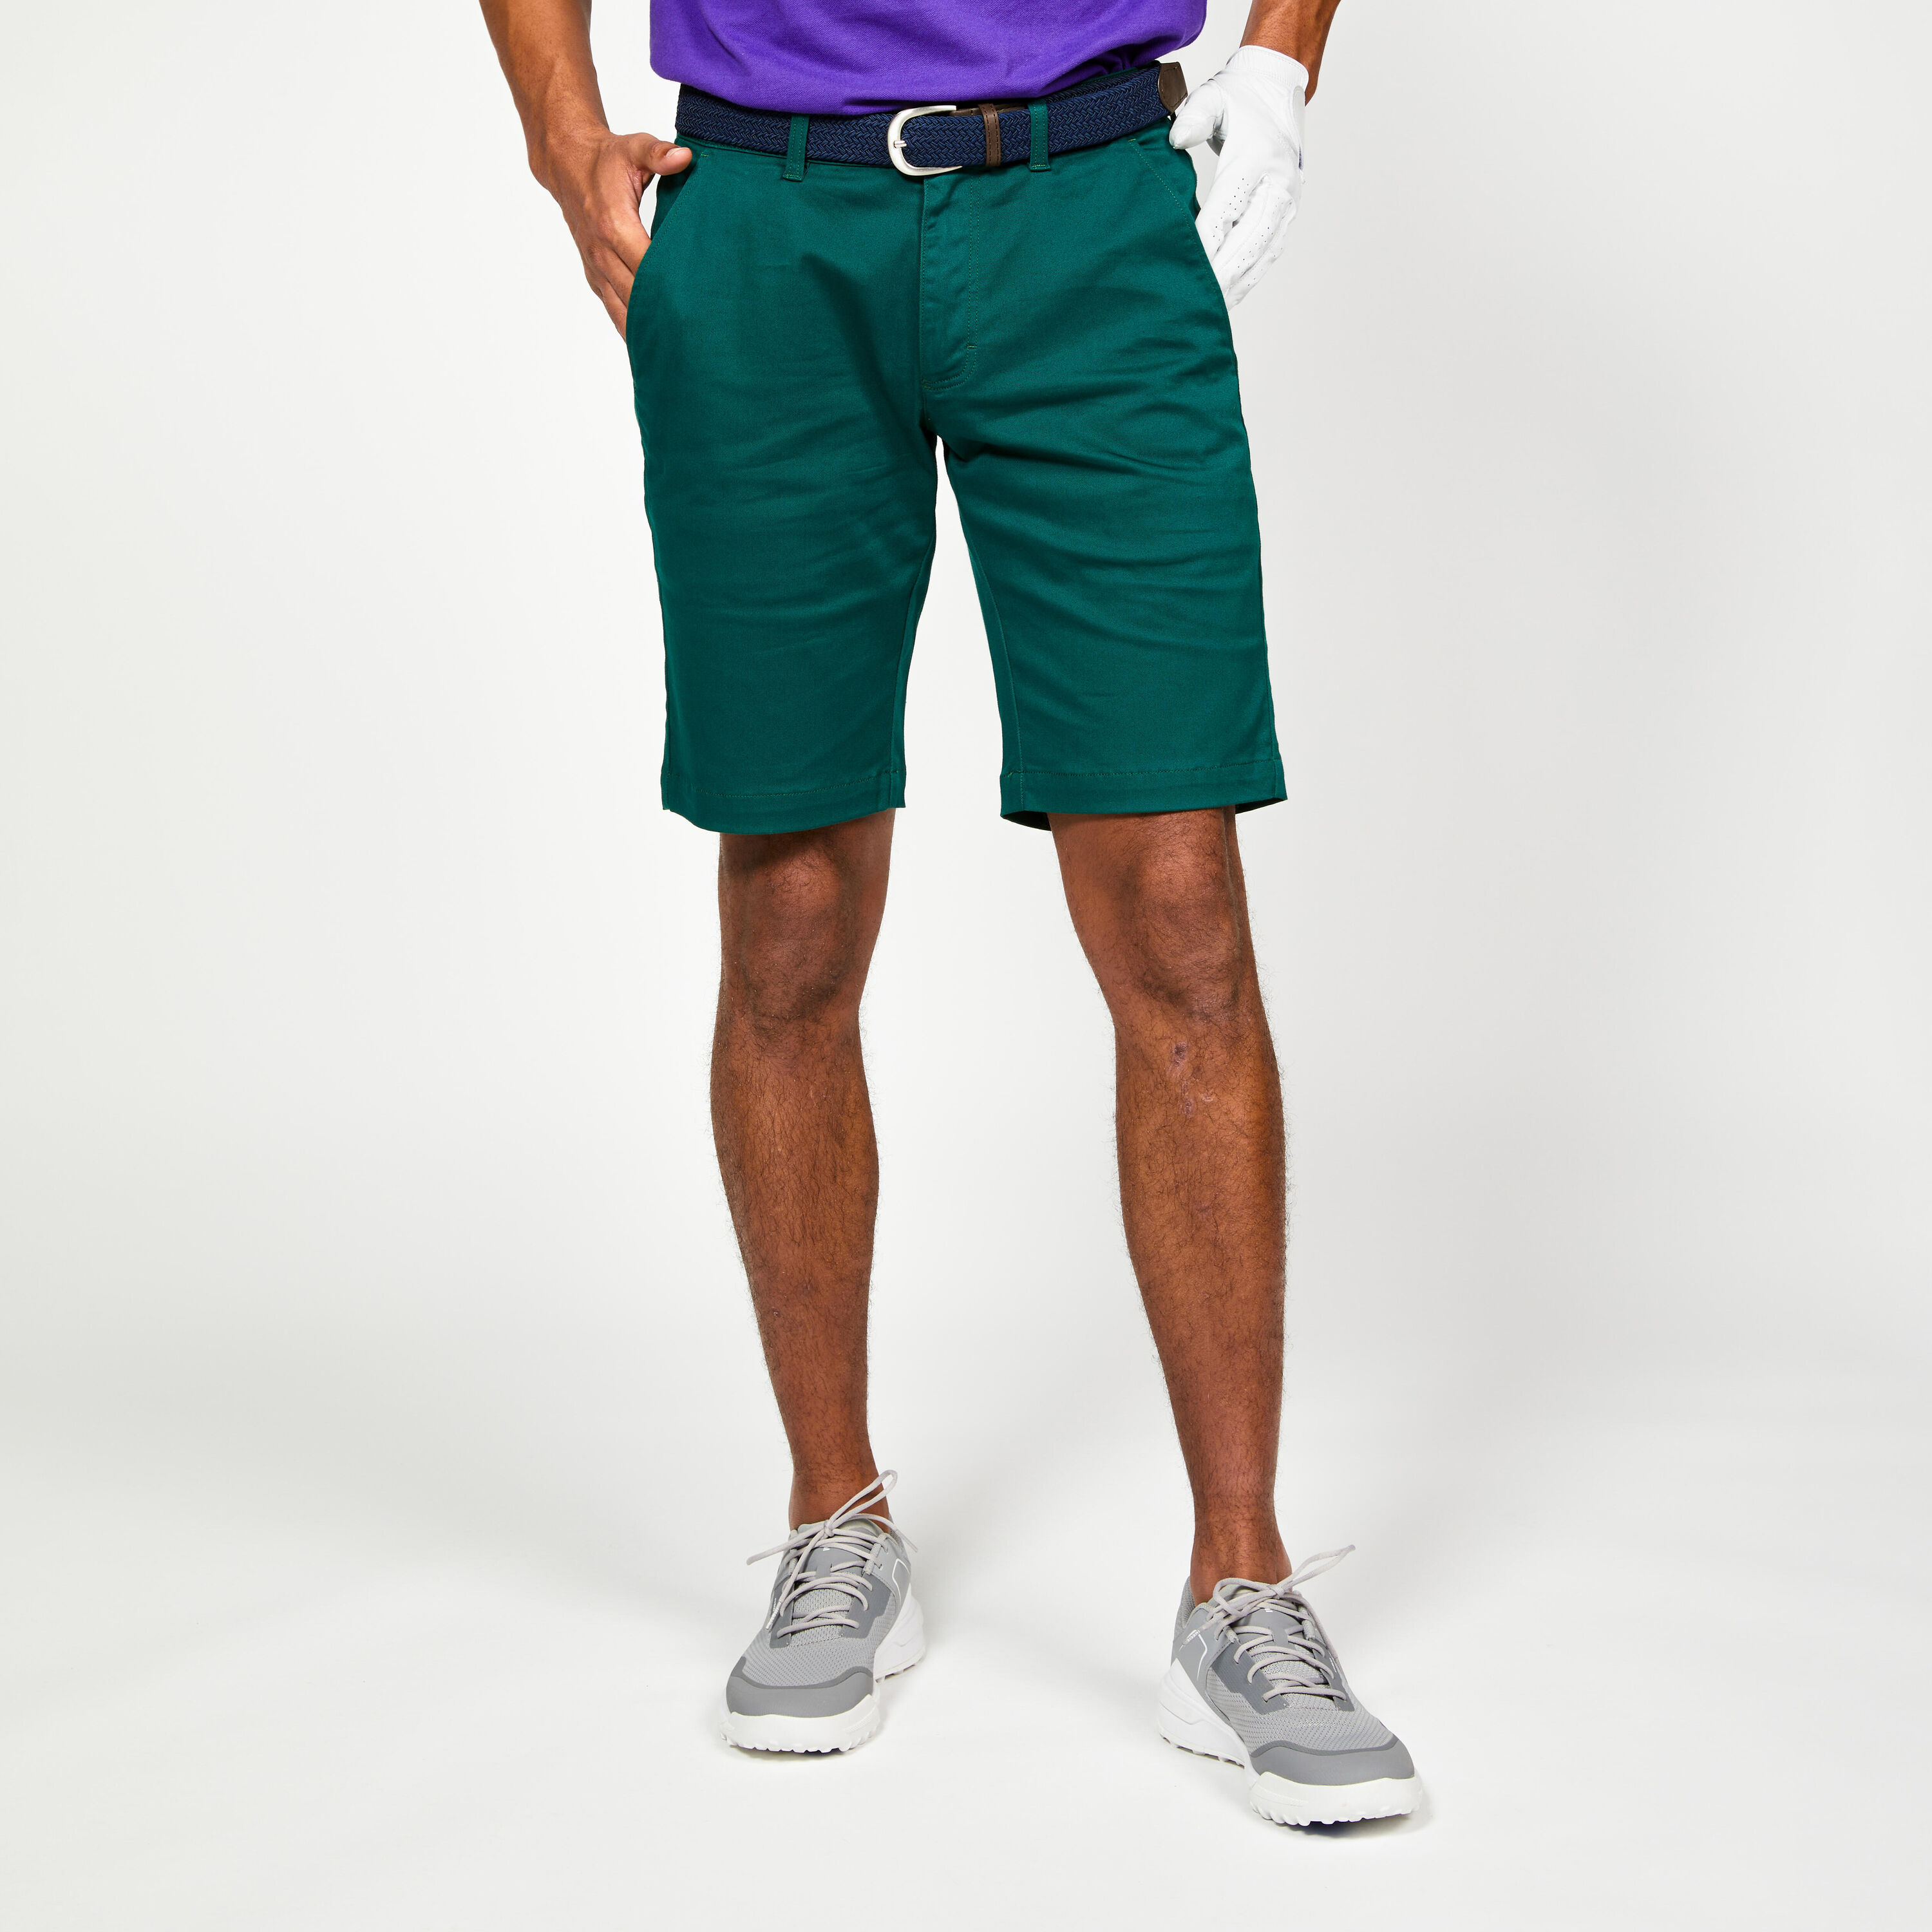 INESIS Men's golf chino shorts - MW500 cypress green